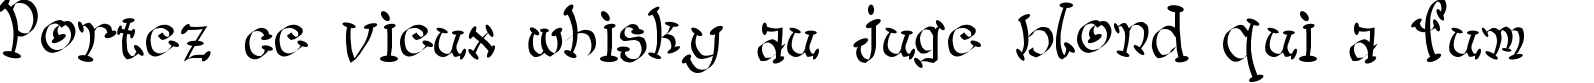 Пример написания шрифтом Wacko текста на французском